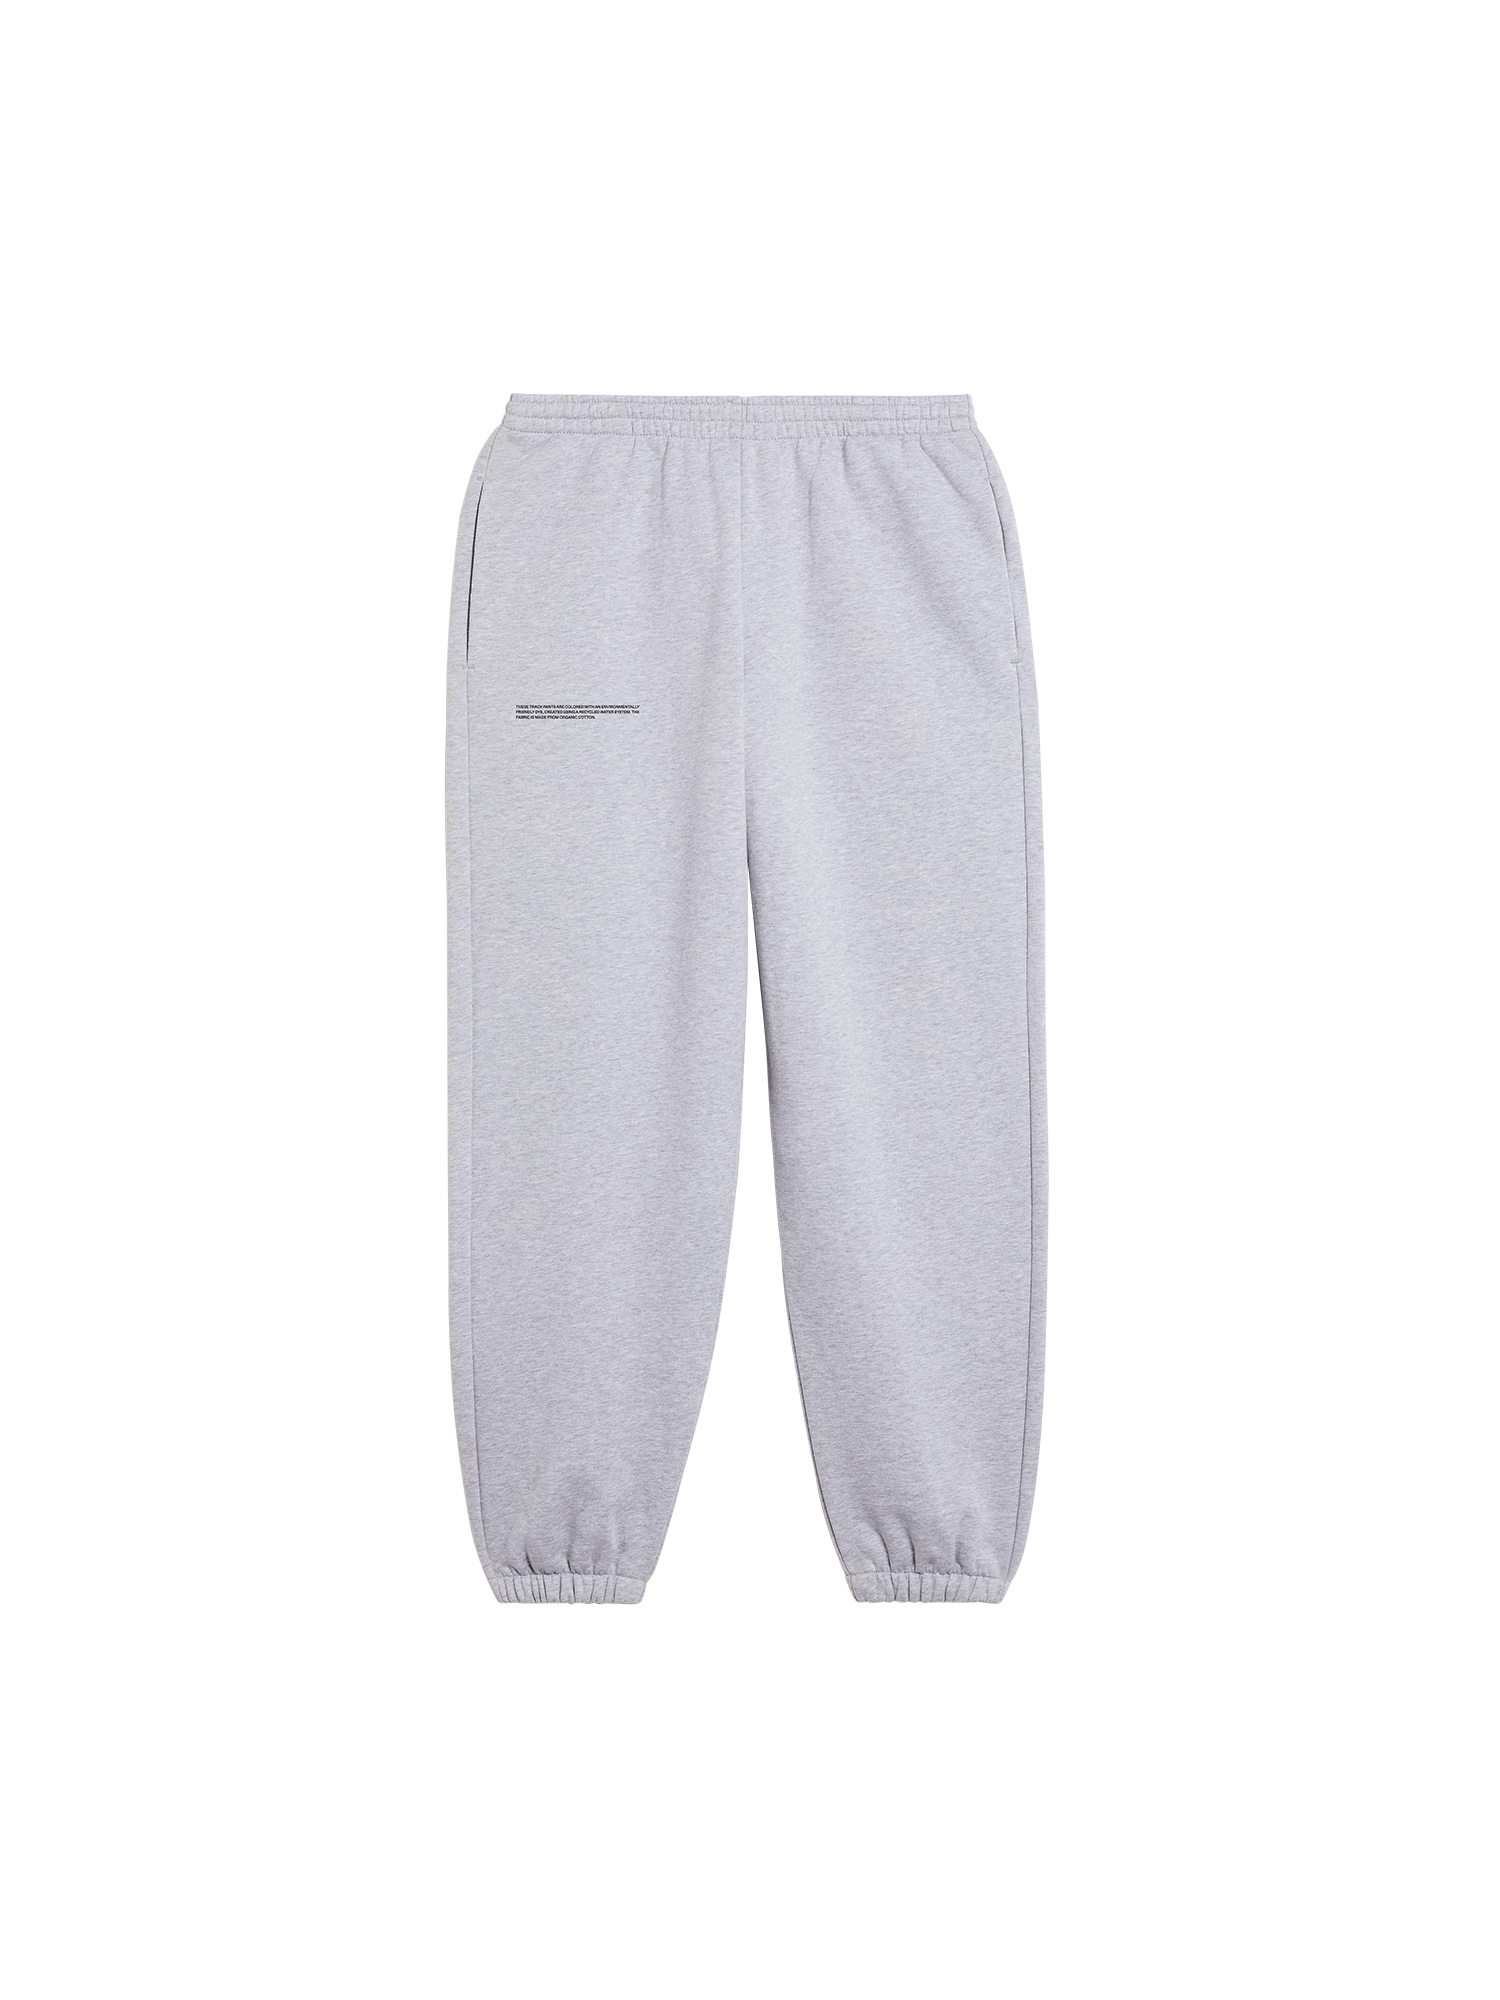 365 Midweight Track Pants—grey marl